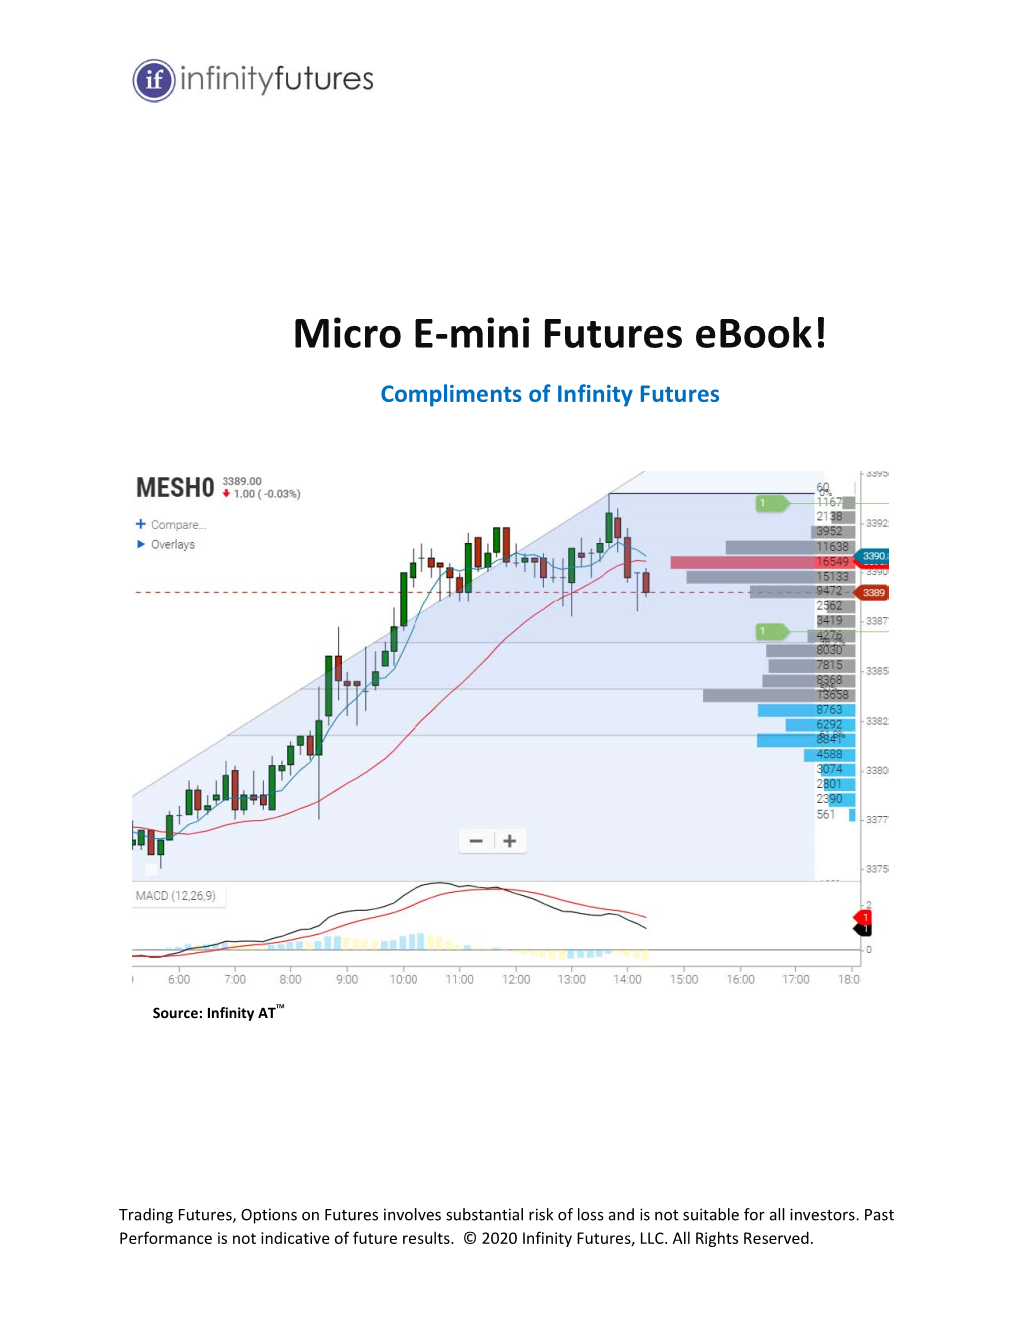 Micro E-Mini Futures Ebook! Compliments of Infinity Futures